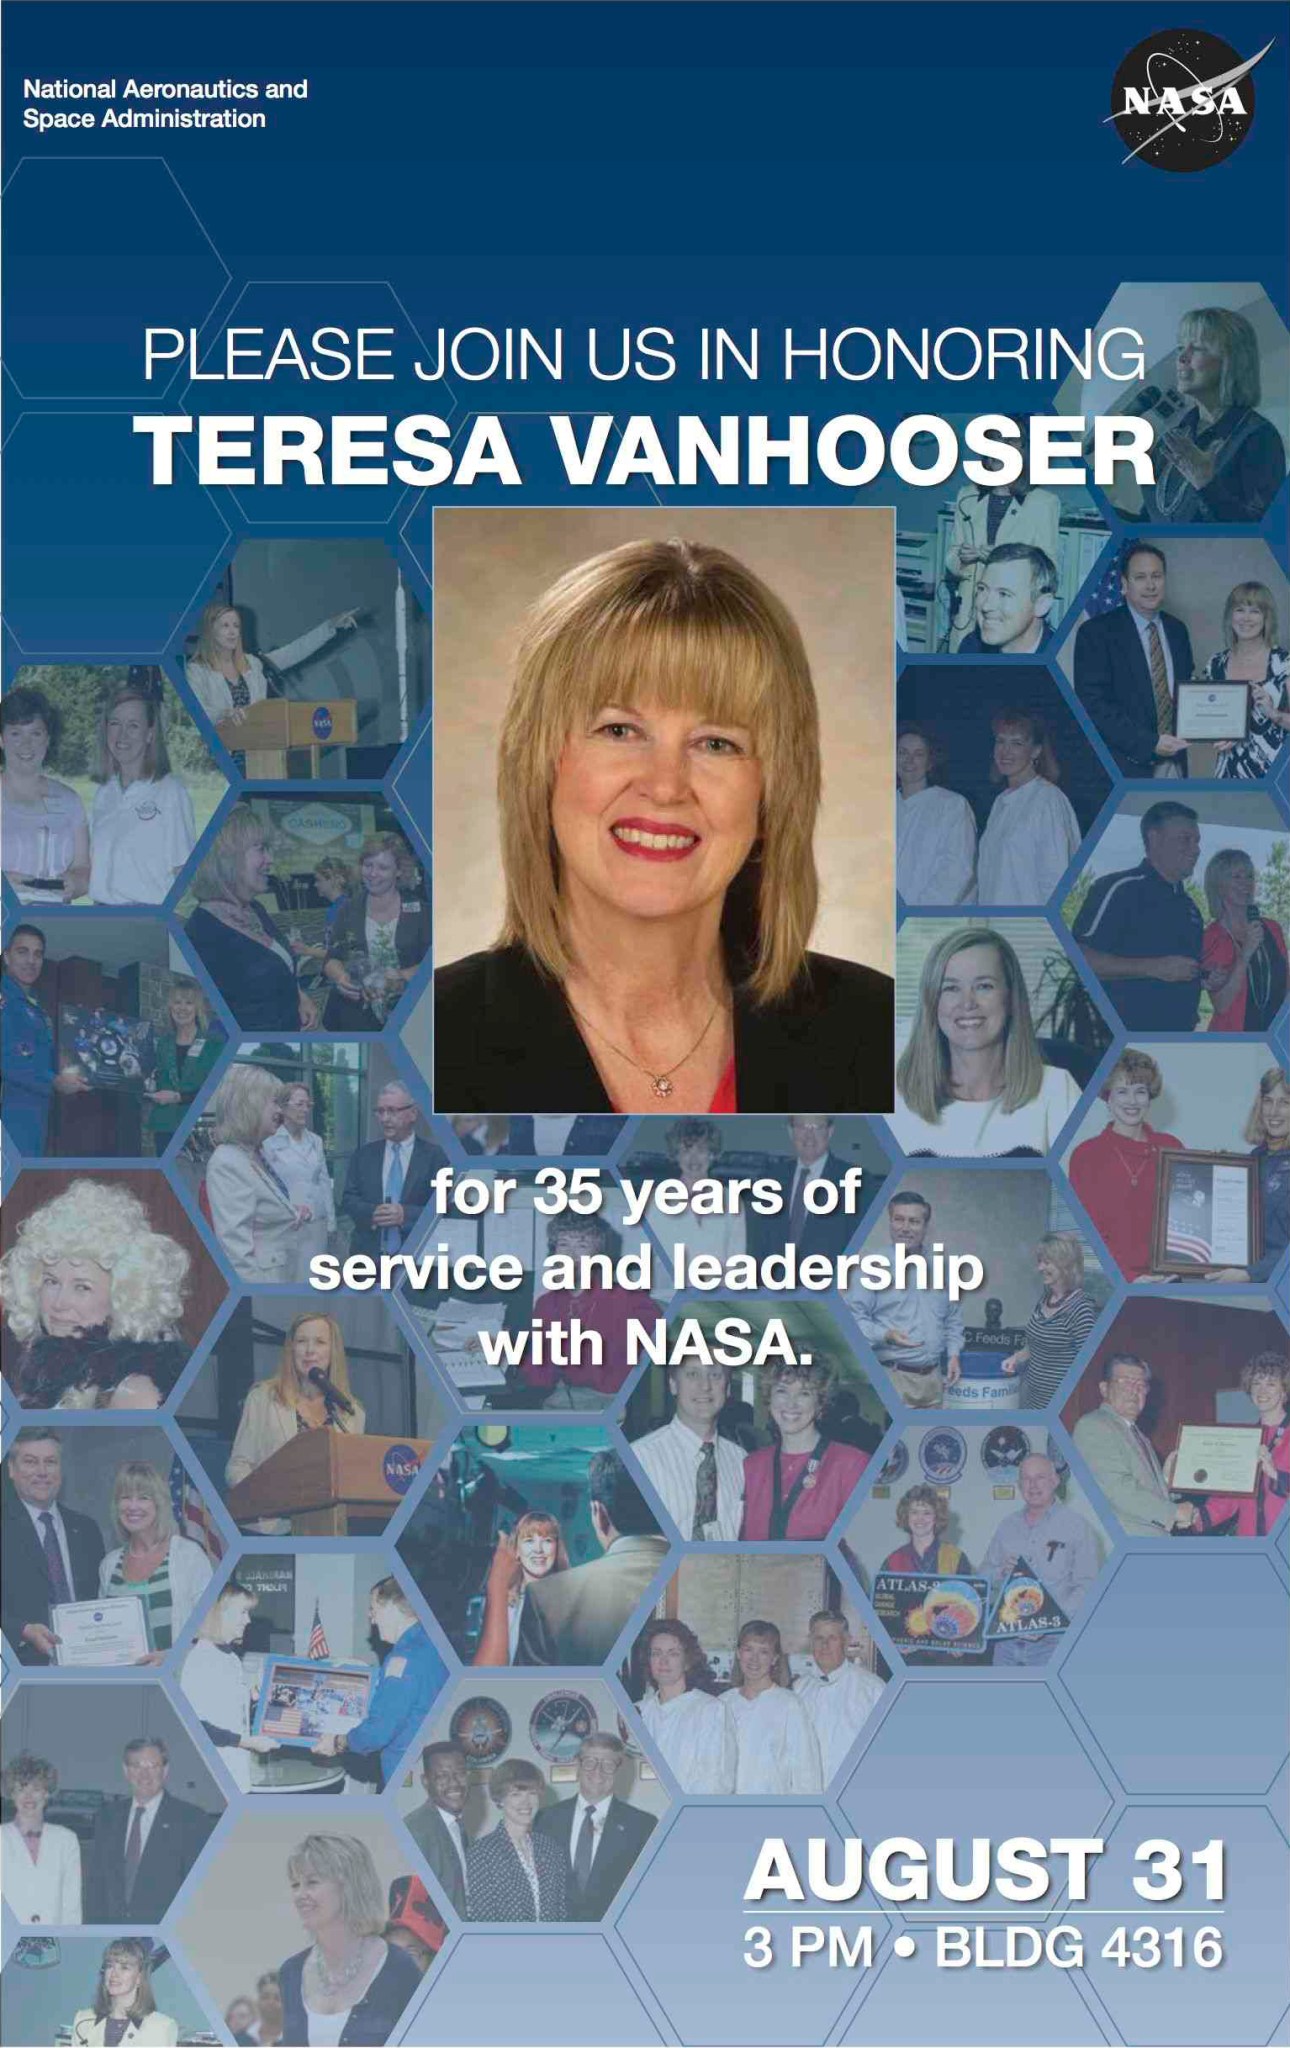 Marshall Deputy Director Teresa Vanhooser retirement image